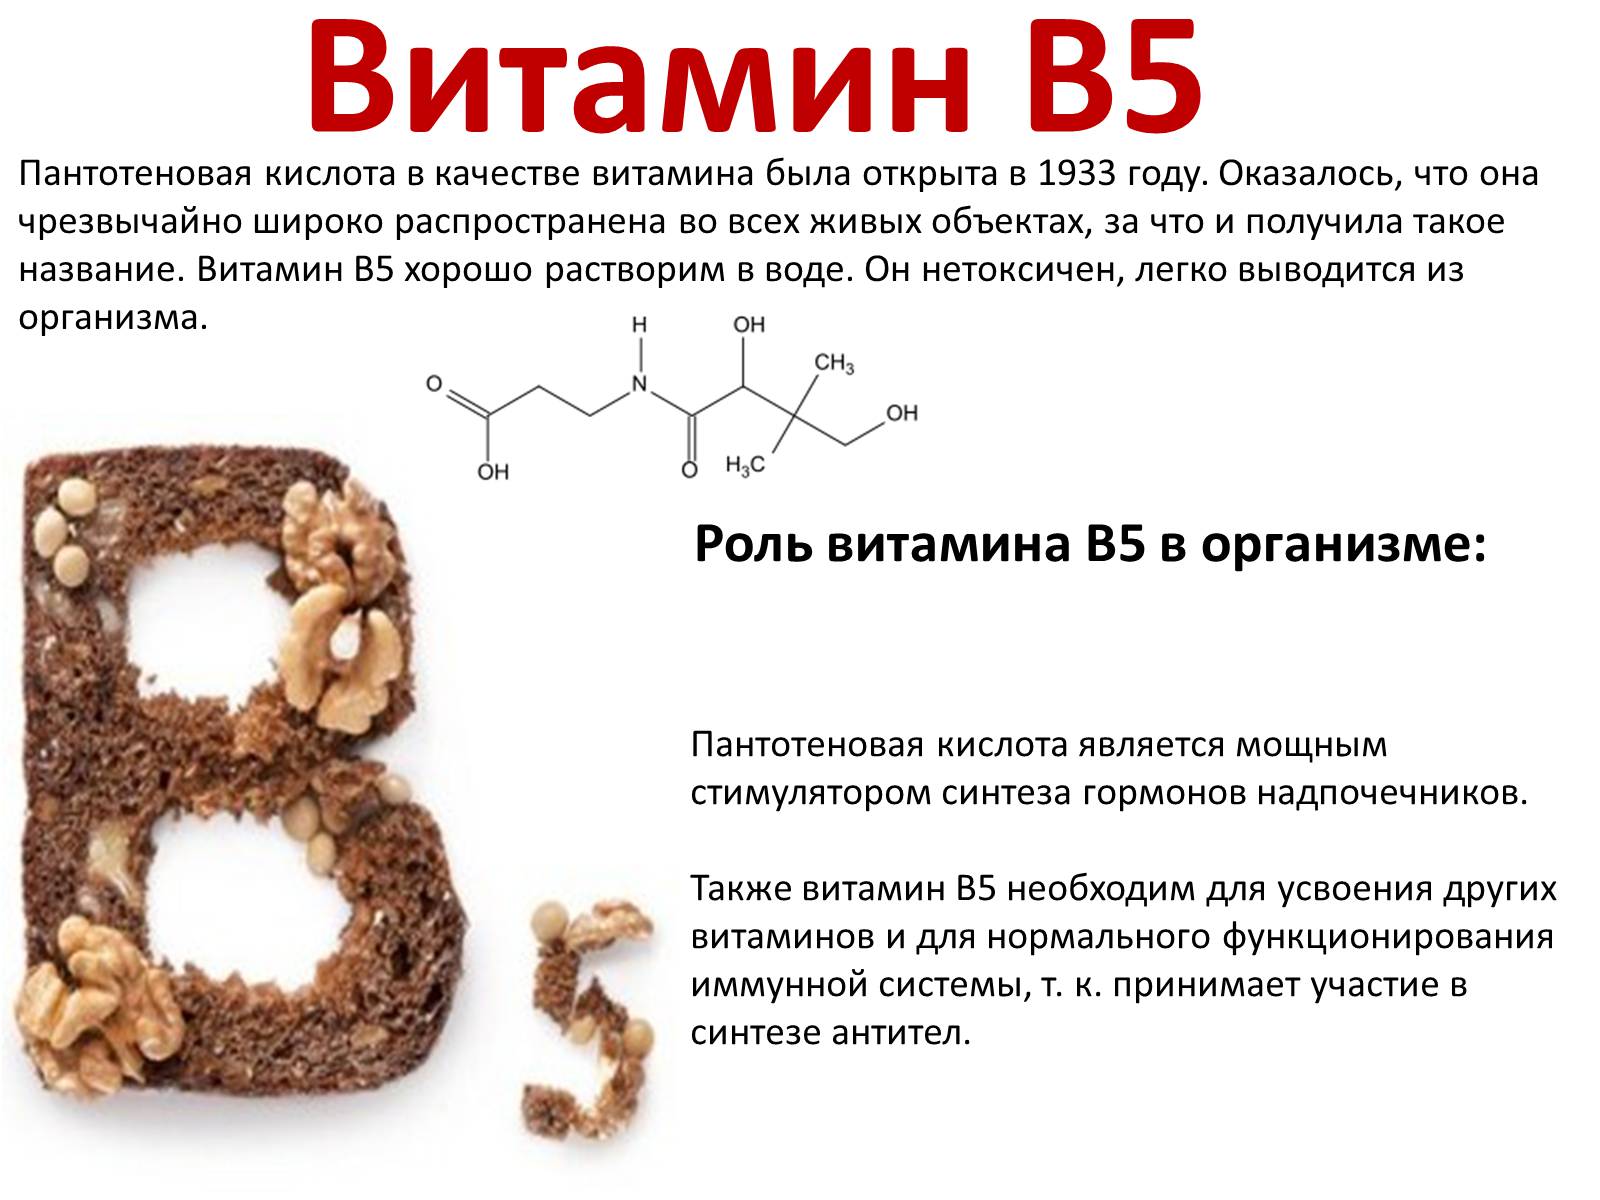 Б 6 для организма. Витамин б5 пантотеновая кислота. Витамин в5 пантотеновая кислота функции. Витамин в5 или пантотеновая кислота. Роль в организме витамина b5.